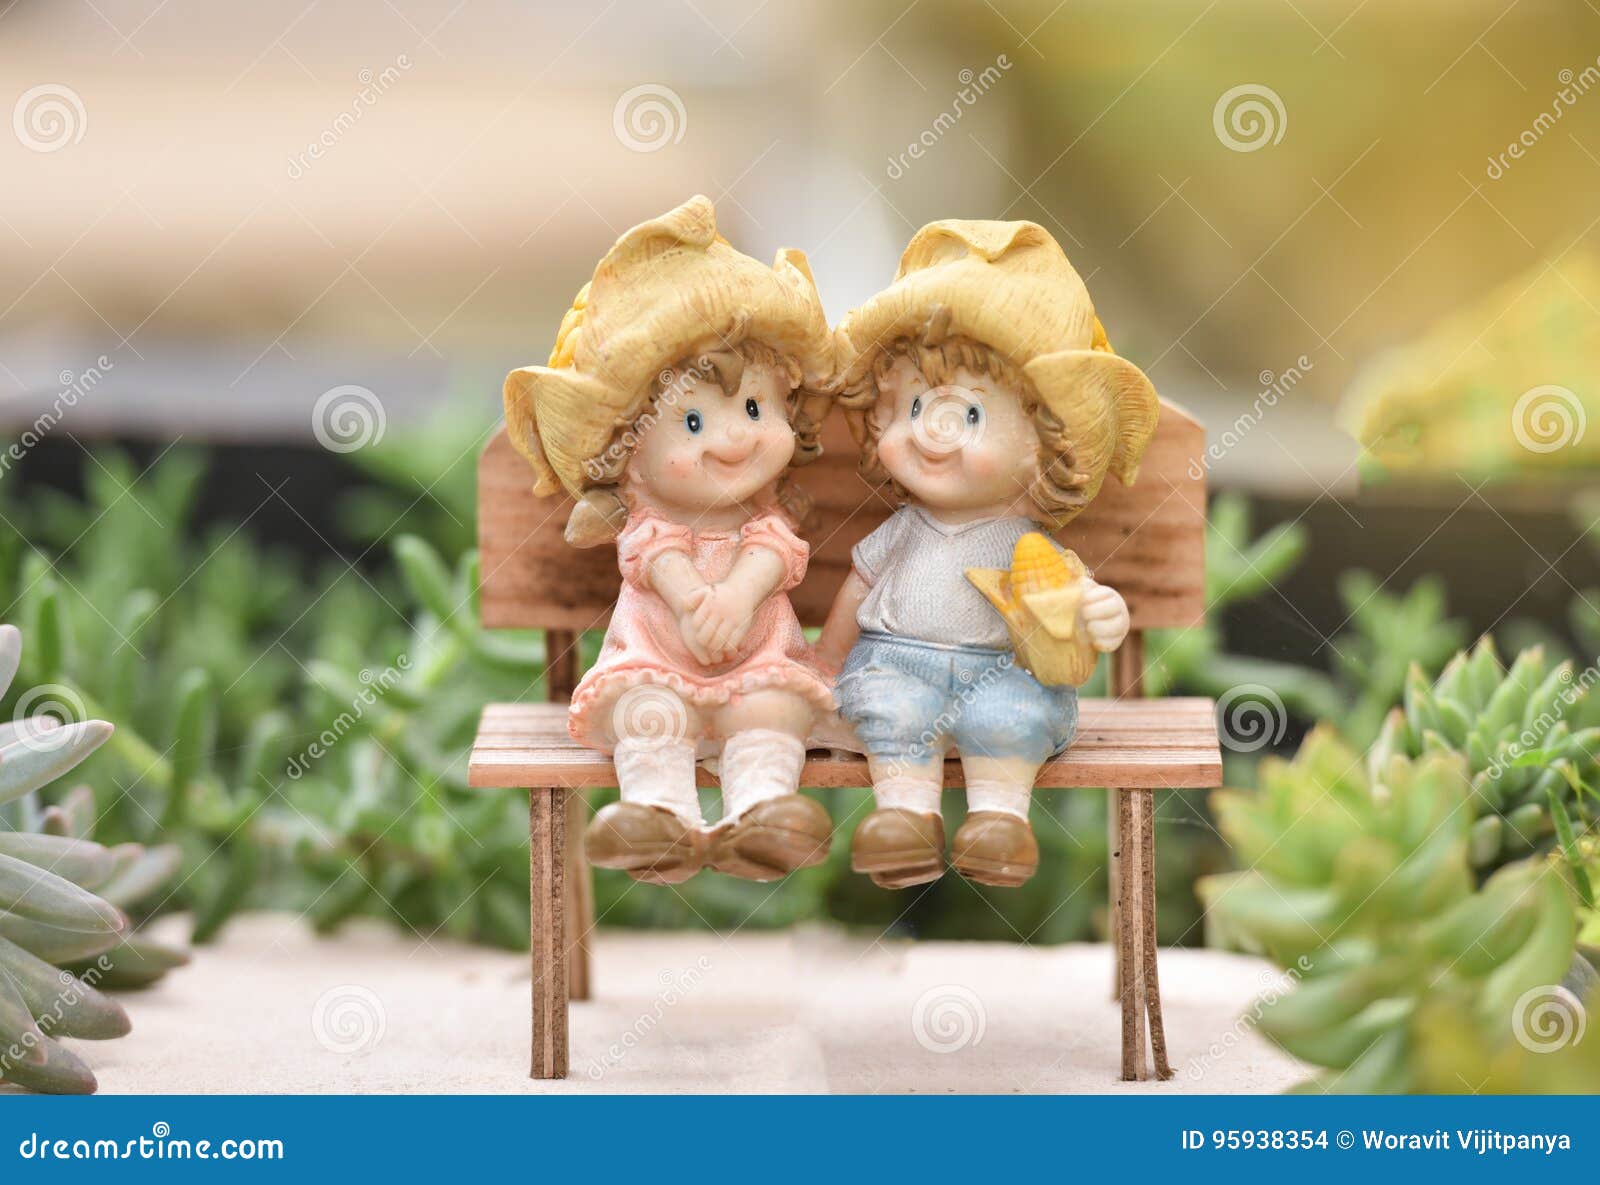 Cute child Dolls in garden stock photo. Image of ceramic - 95938354